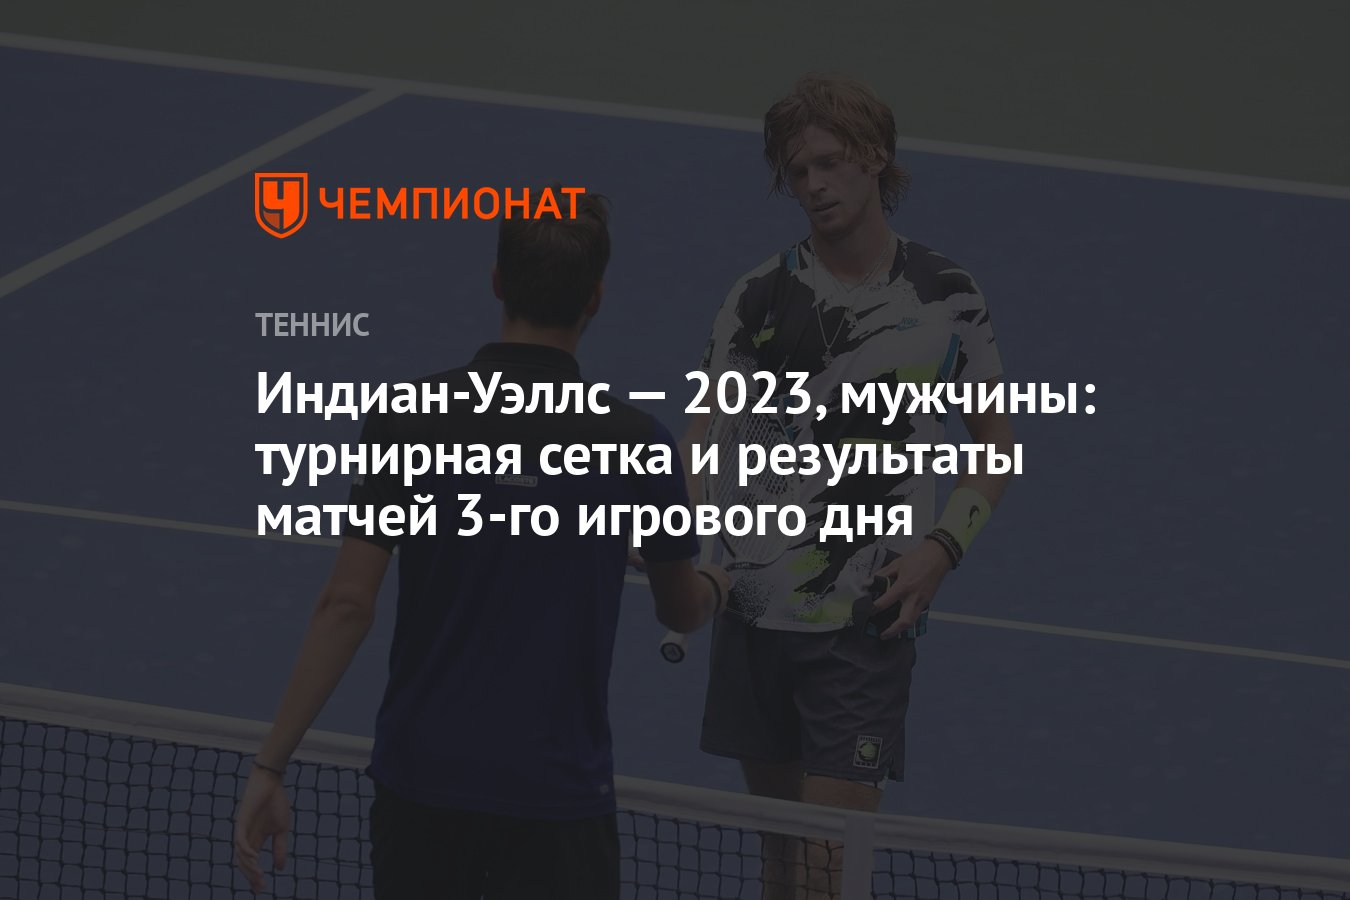 Индиан Уэллс 2023 мужчины. Теннис Индиан-Уэллс 2024 турнирная сетка мужчины. Руммер утллс 2023.